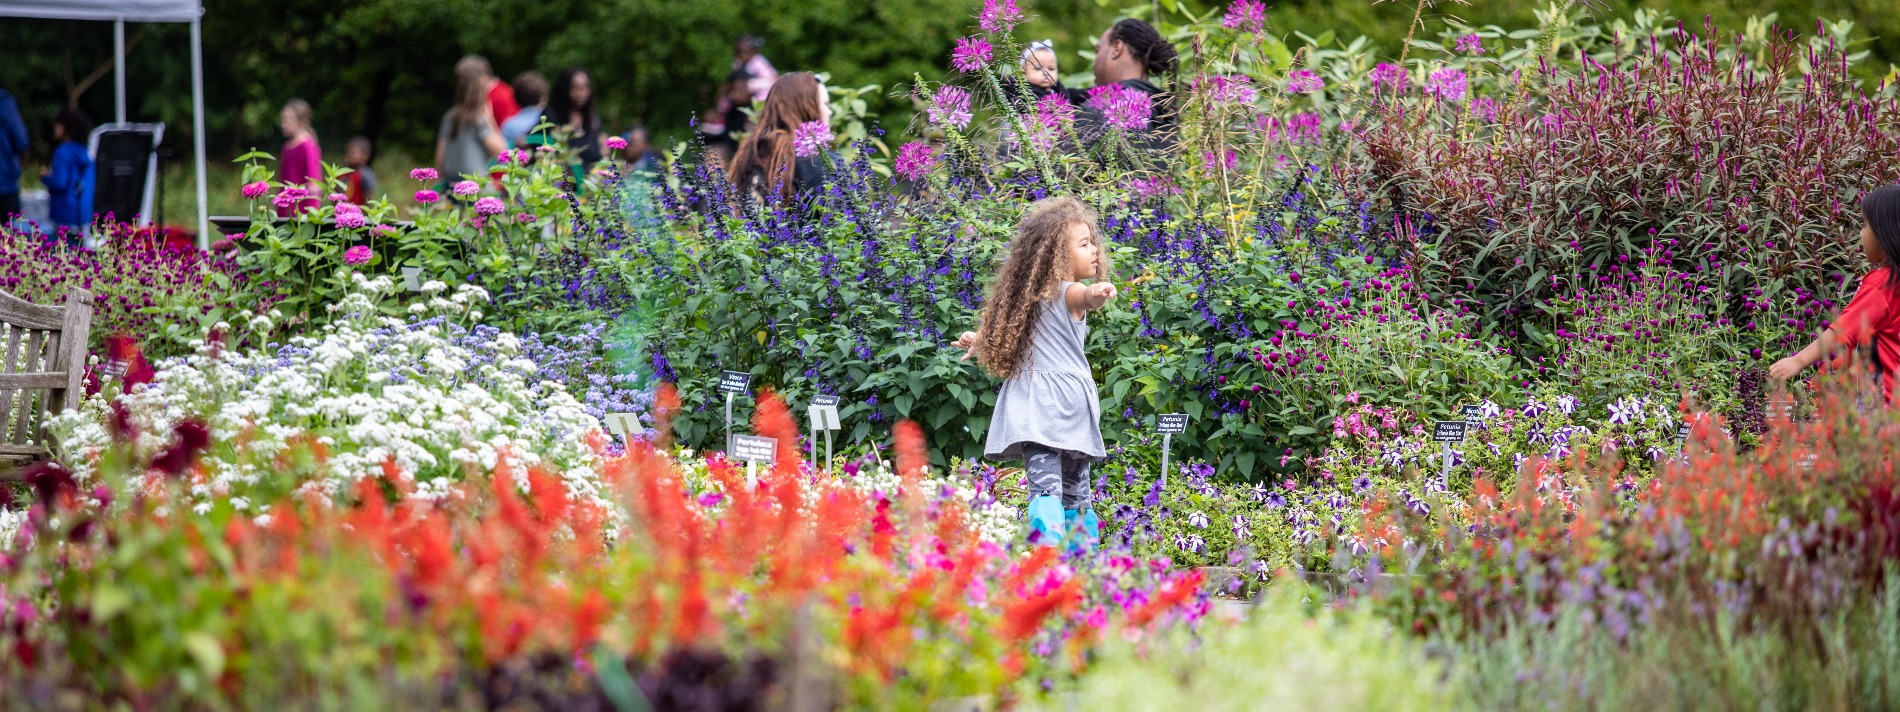 A child twirls in the demonstration garden at Applewood